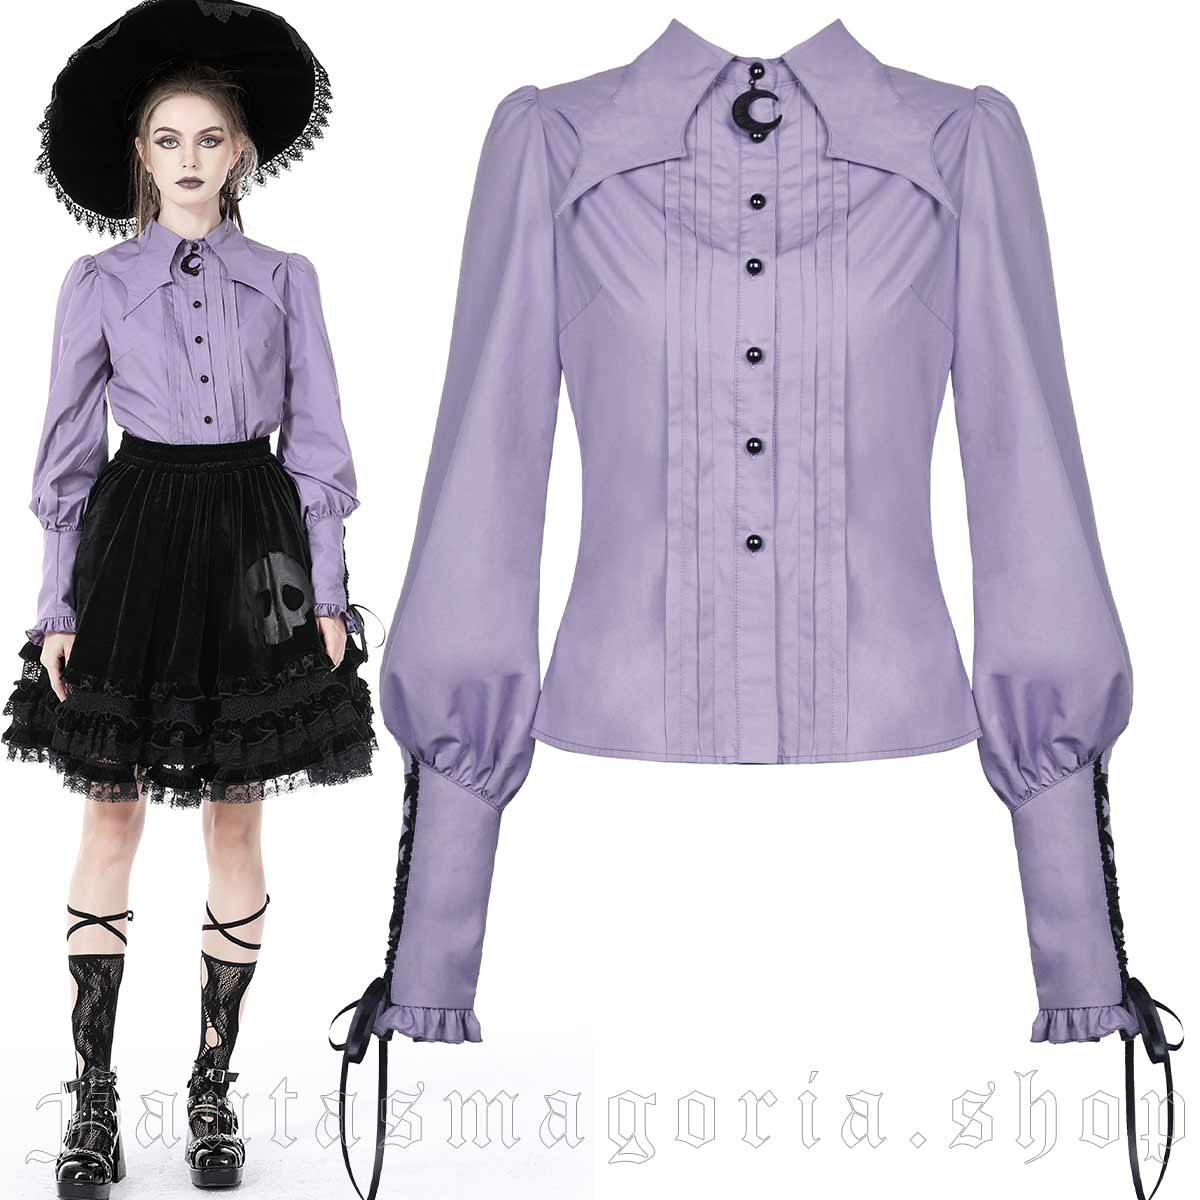 Women's Gothic violet long sleeve flat collar shirt. - Dark in Love - IW095